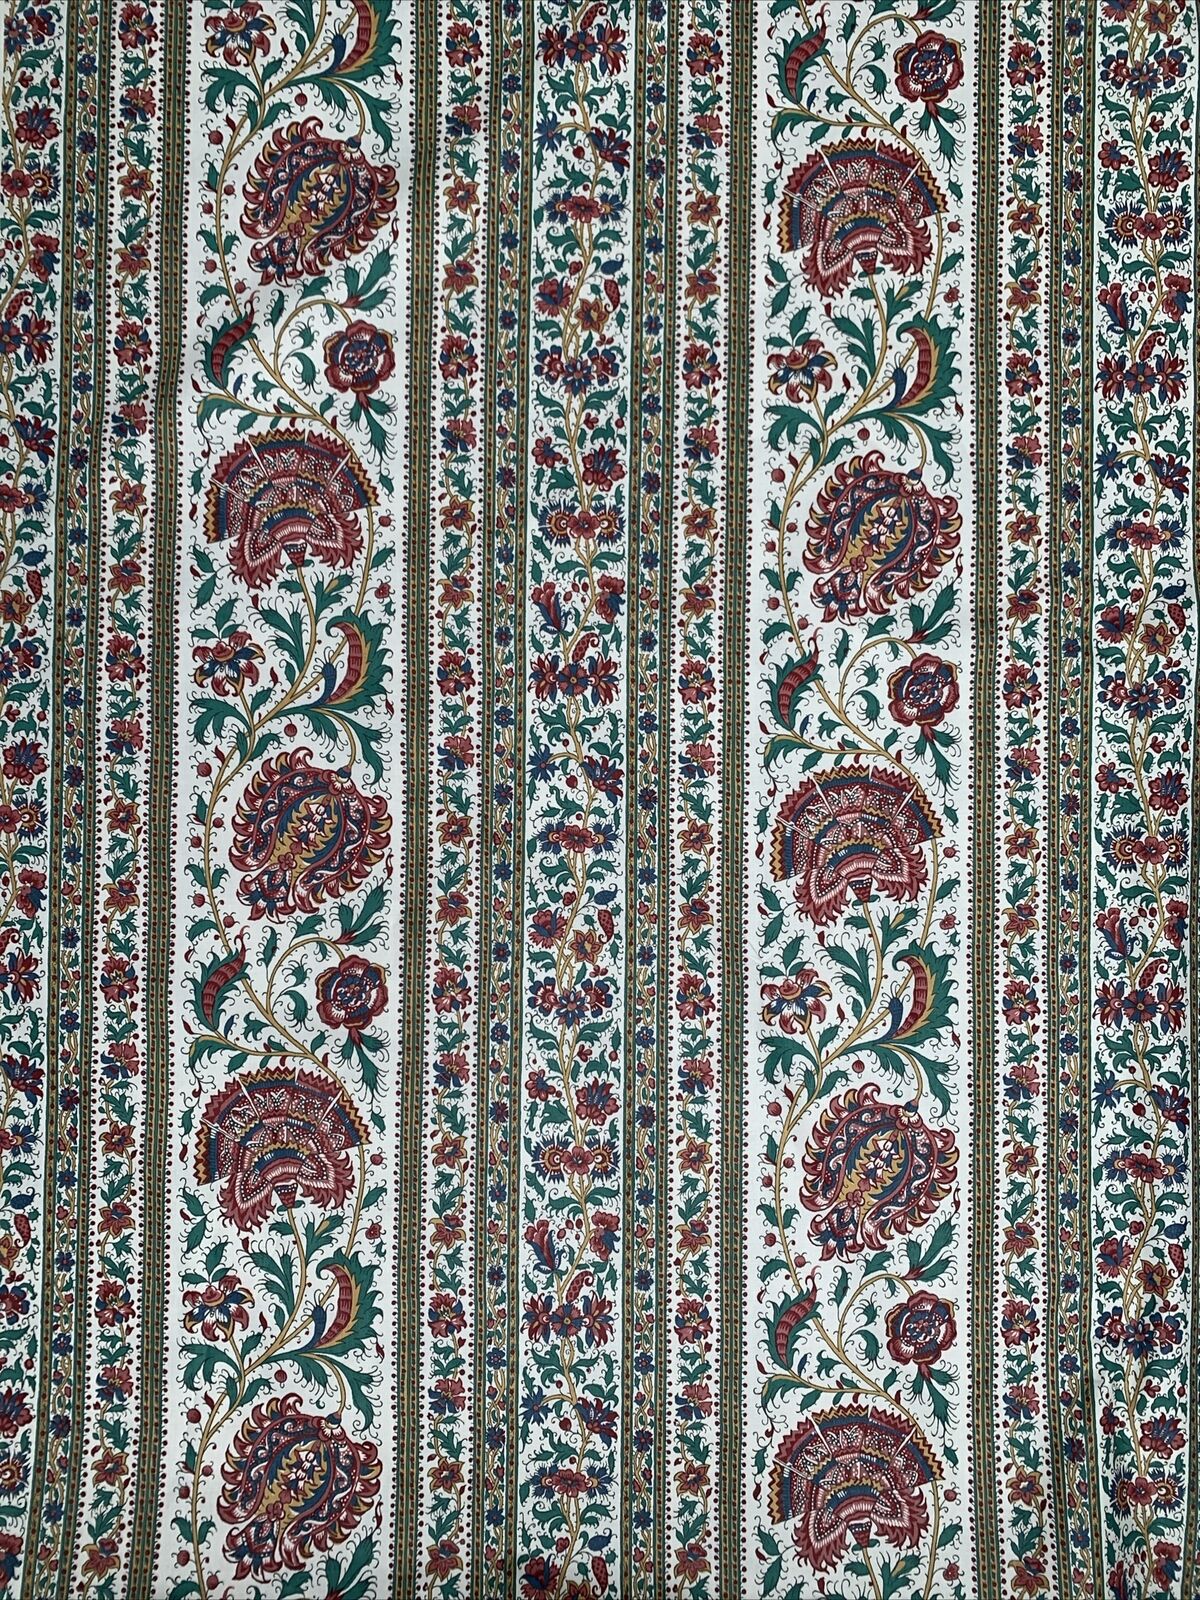 RARE,Vintage Sanderson 15 metre roll of fabric “Marakesh” print Cotton Fabric 15